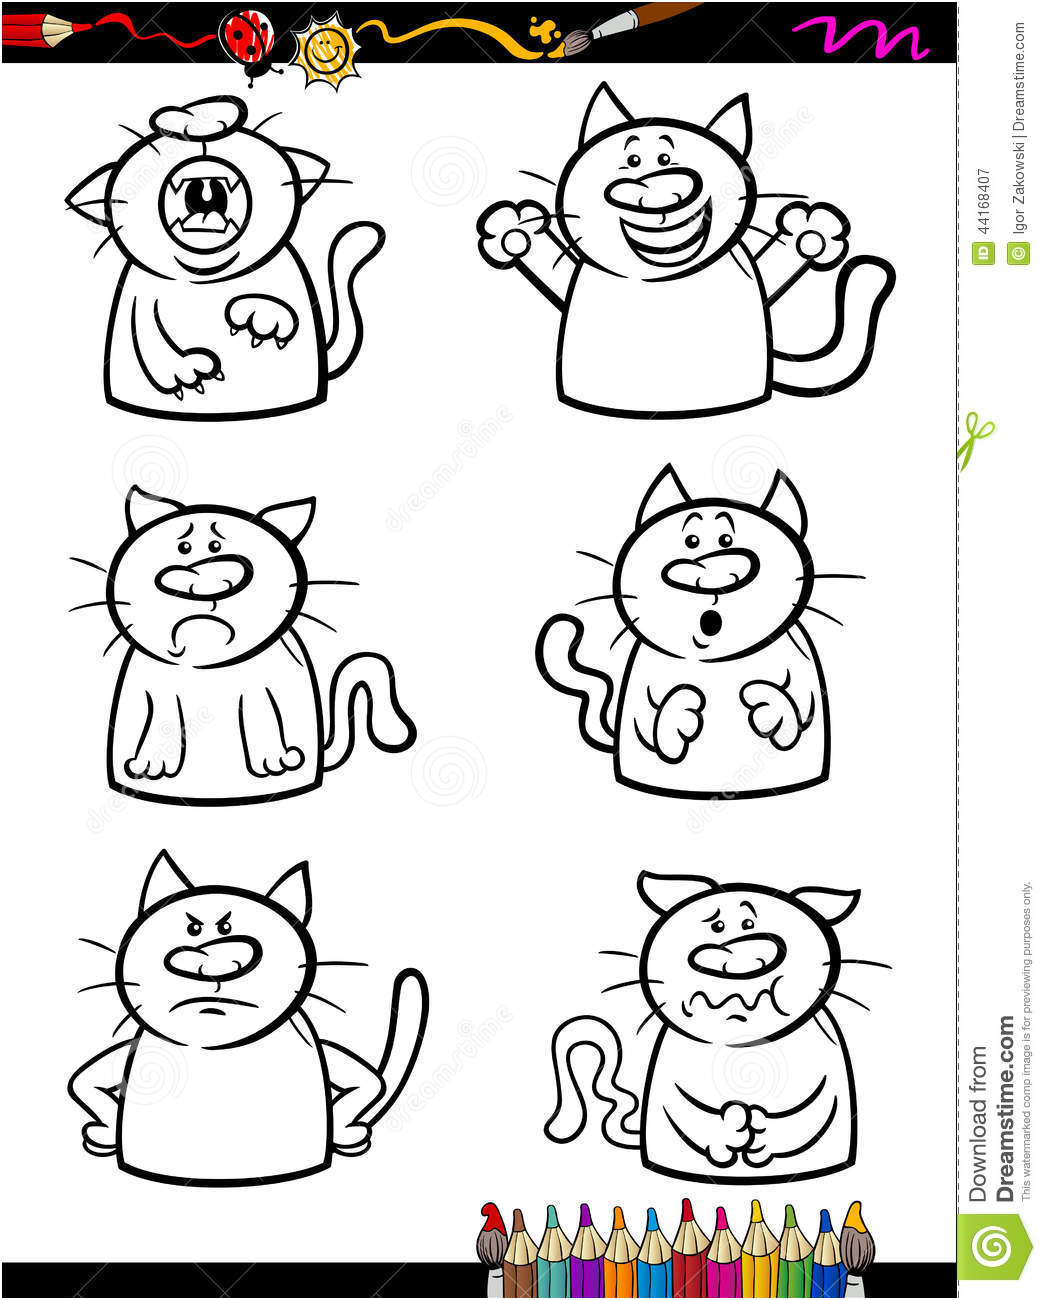 stock illustration cats emotion set cartoon coloring book page illustration black white funny expressing emotions children image